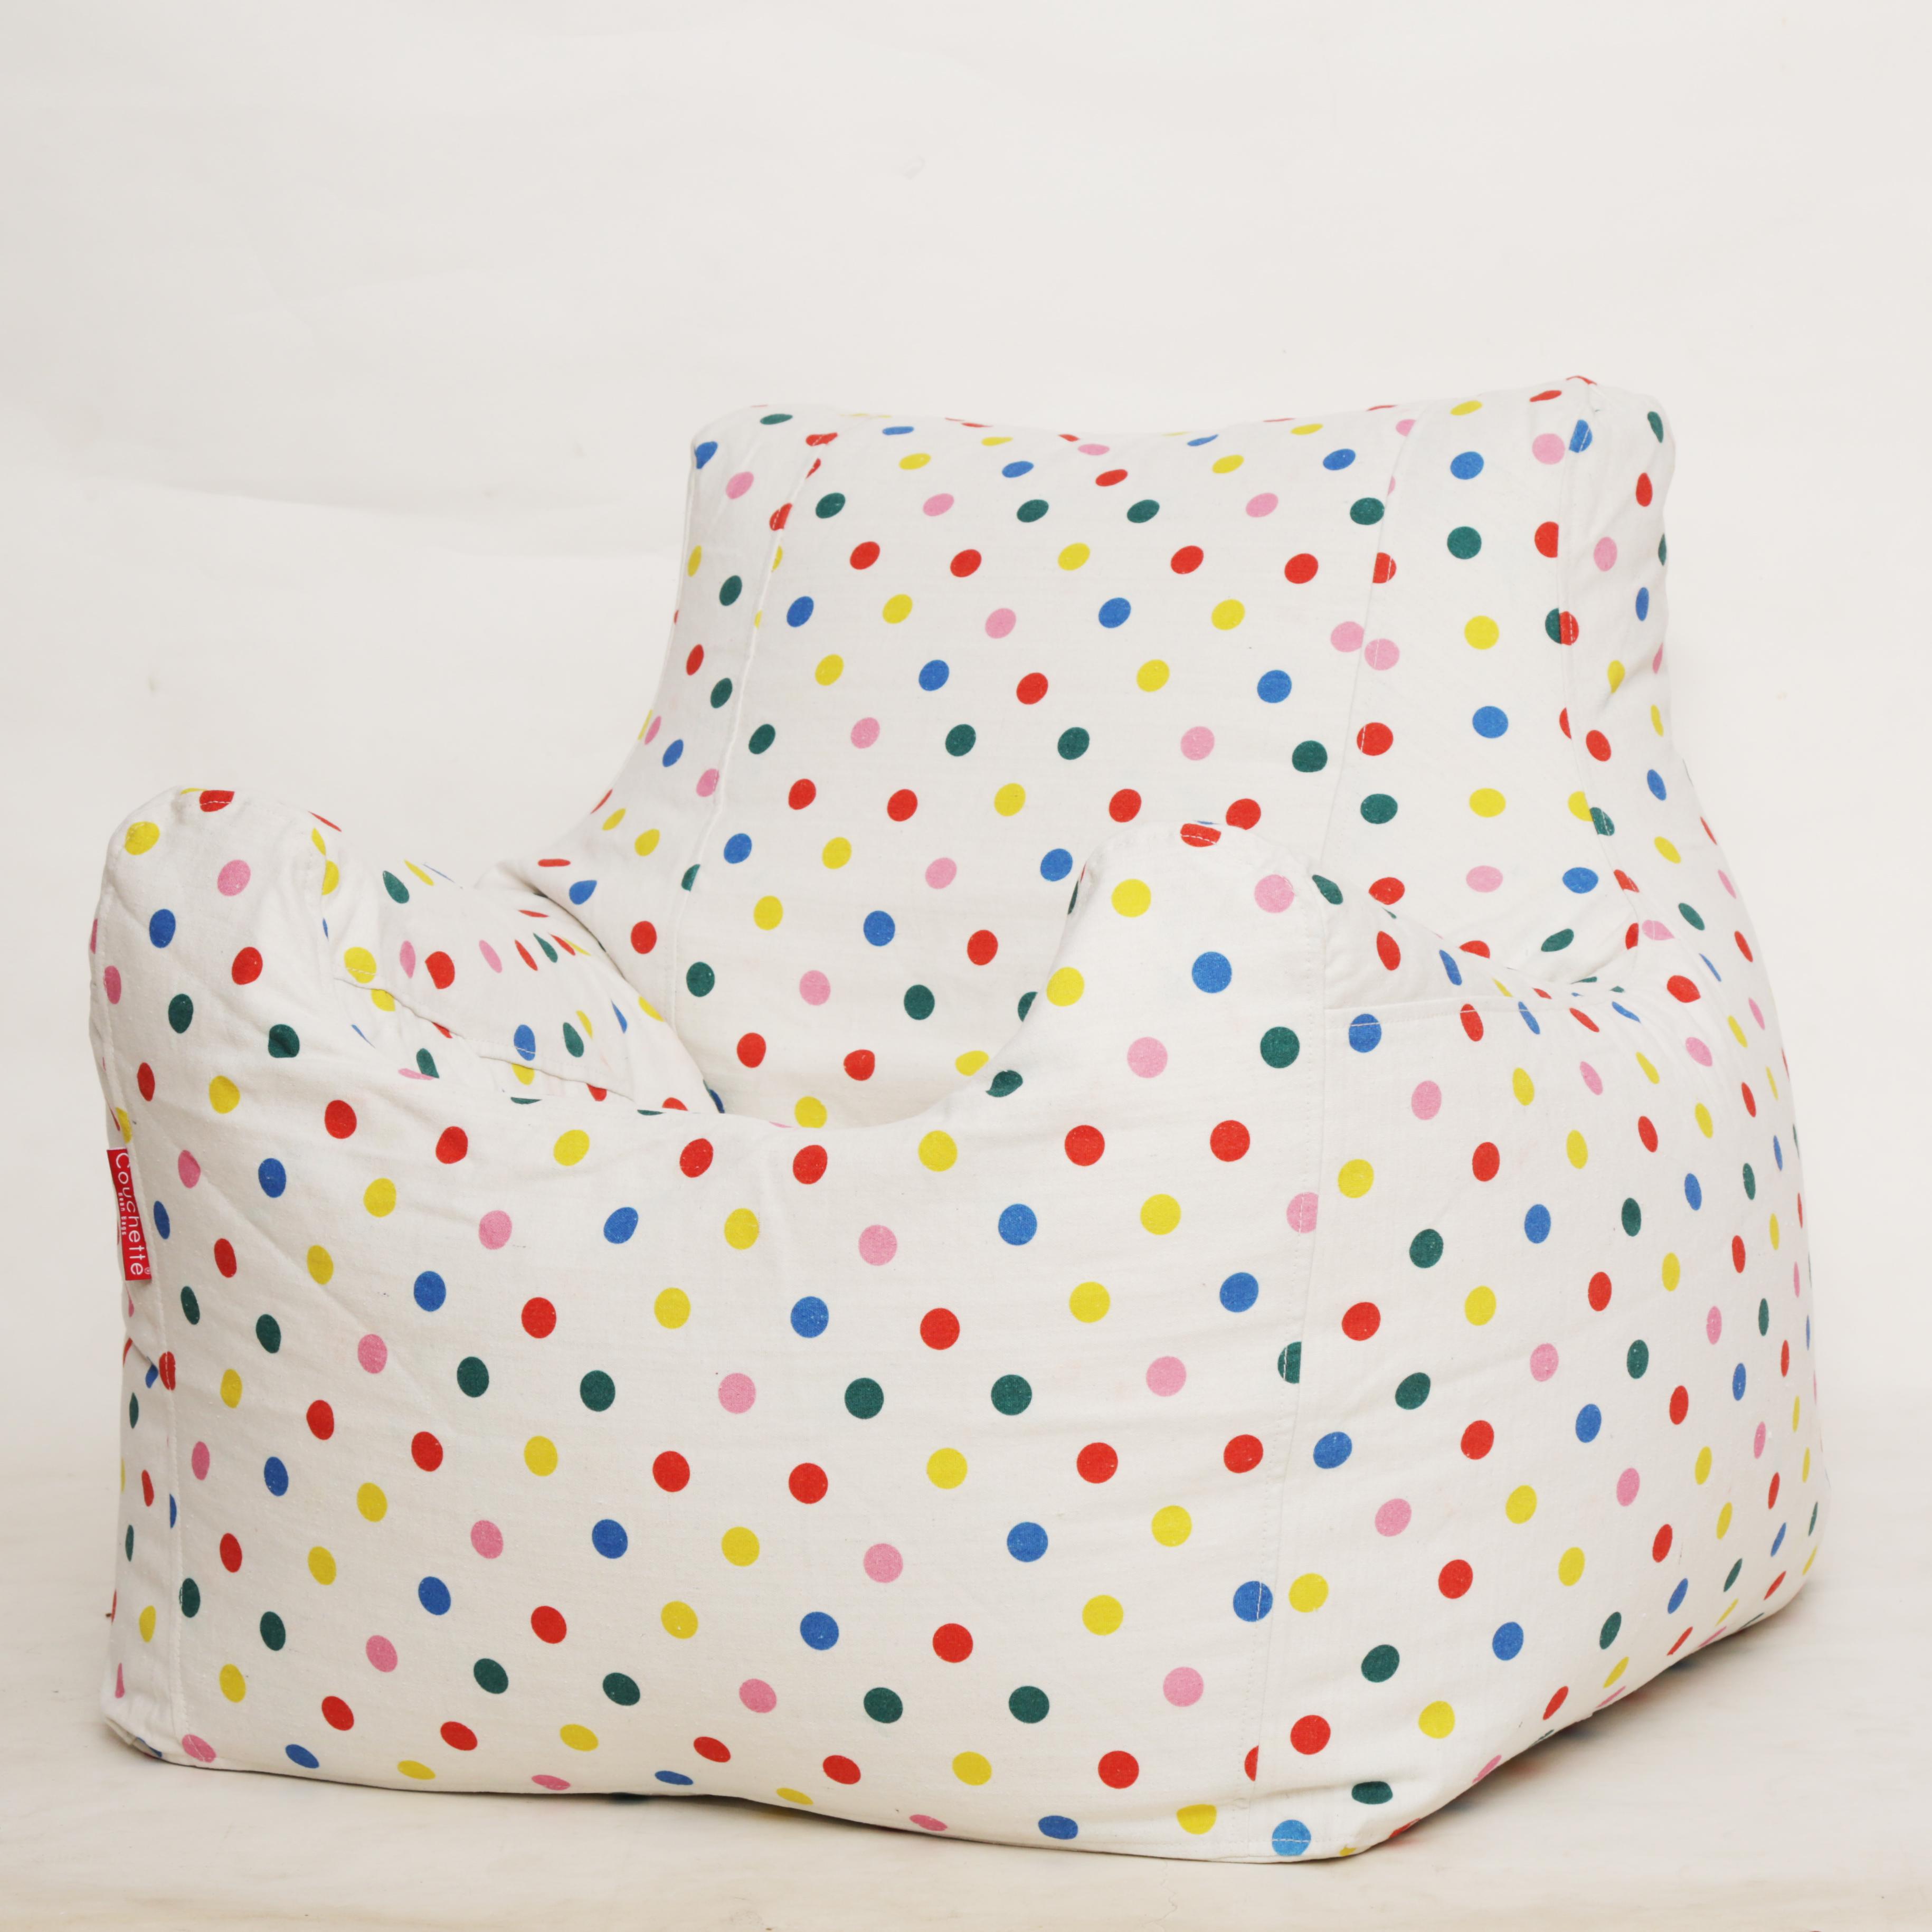 Couchette® Bean Bag XXXL Lounge Chair Bean Bag Cover with Footrest, Wi -  Home Decor Lo